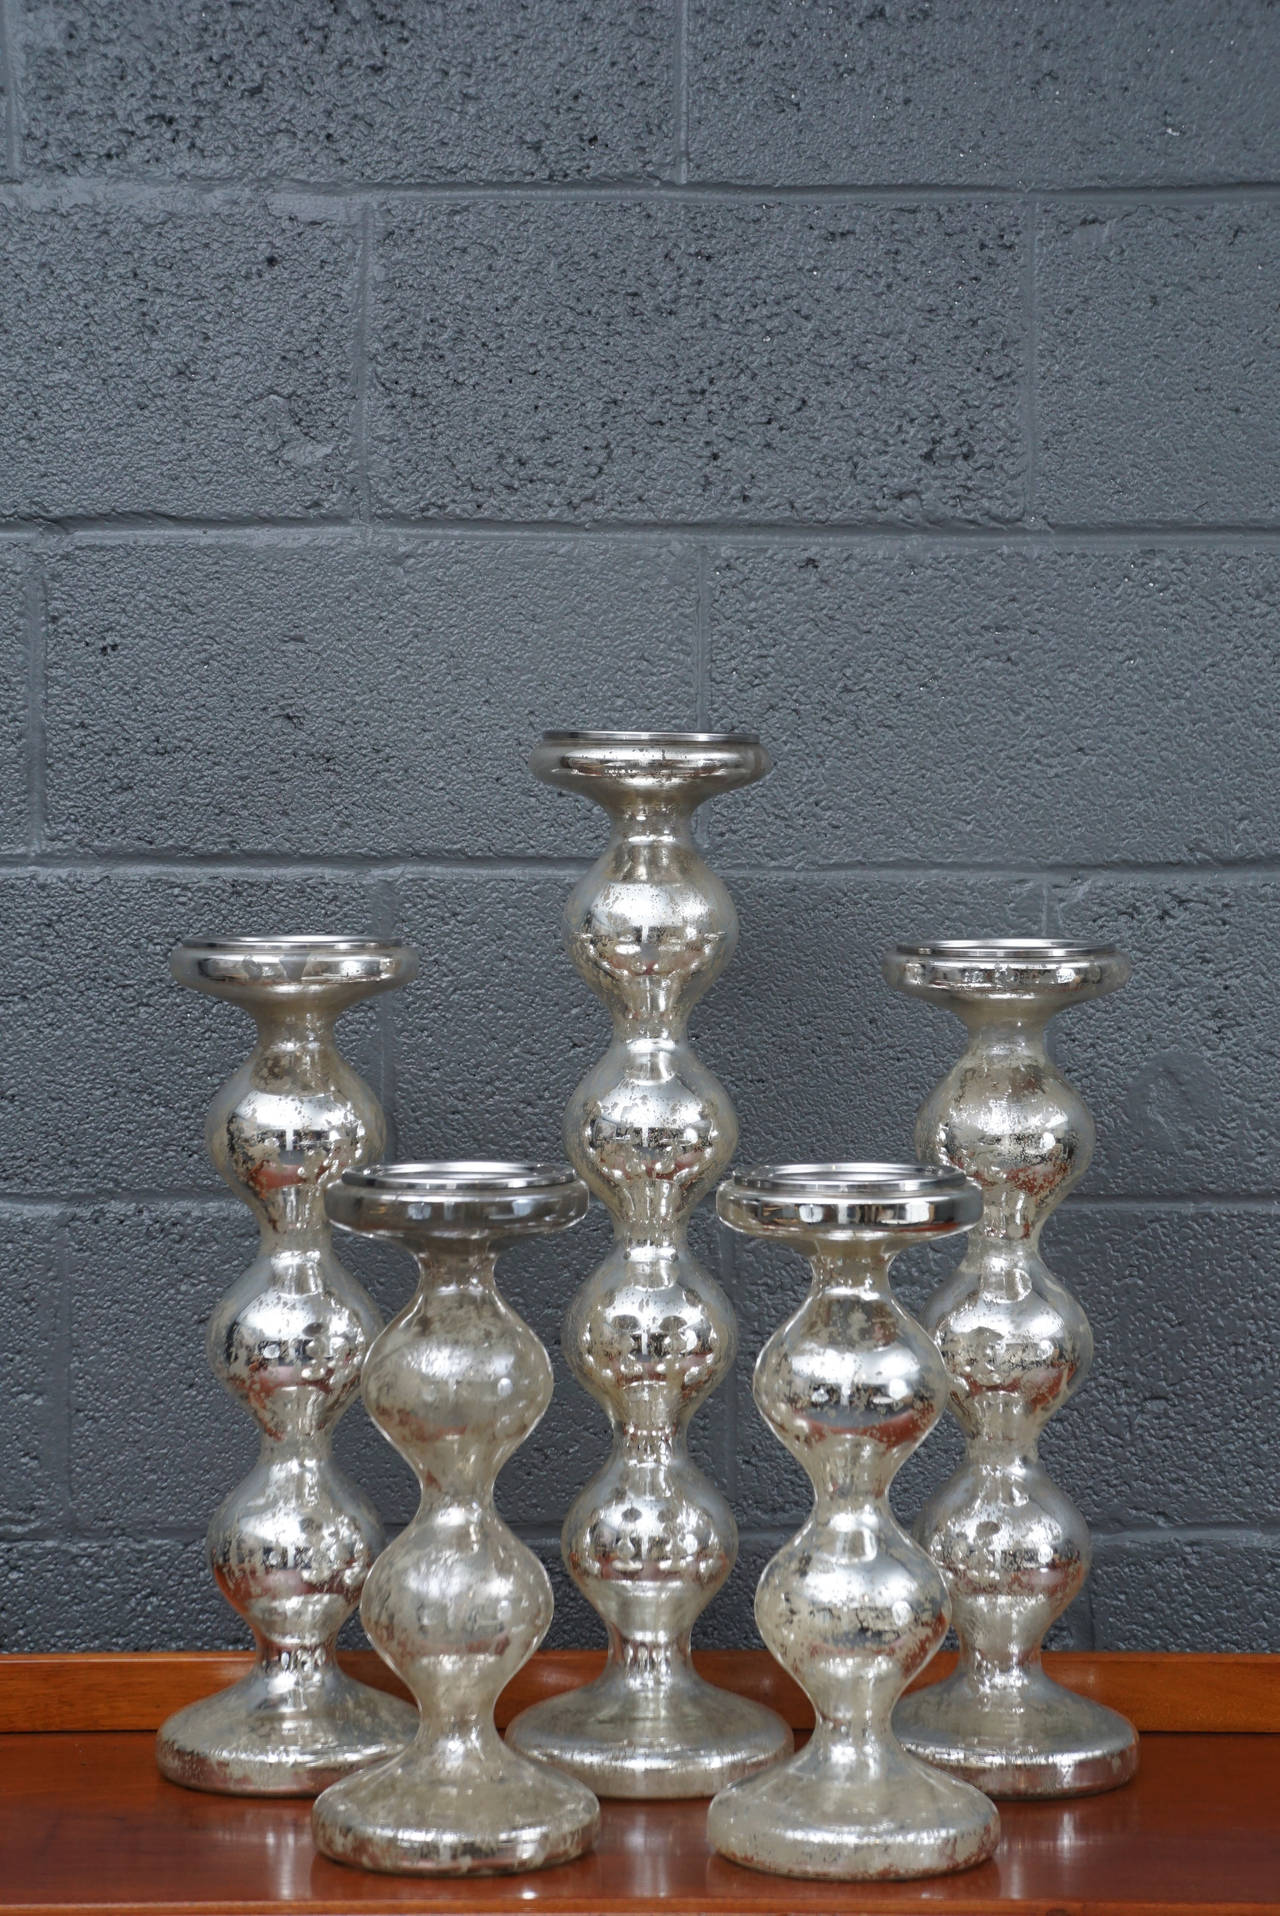 Five beautiful mercury glass candlesticks. A lovely collected arrangement.